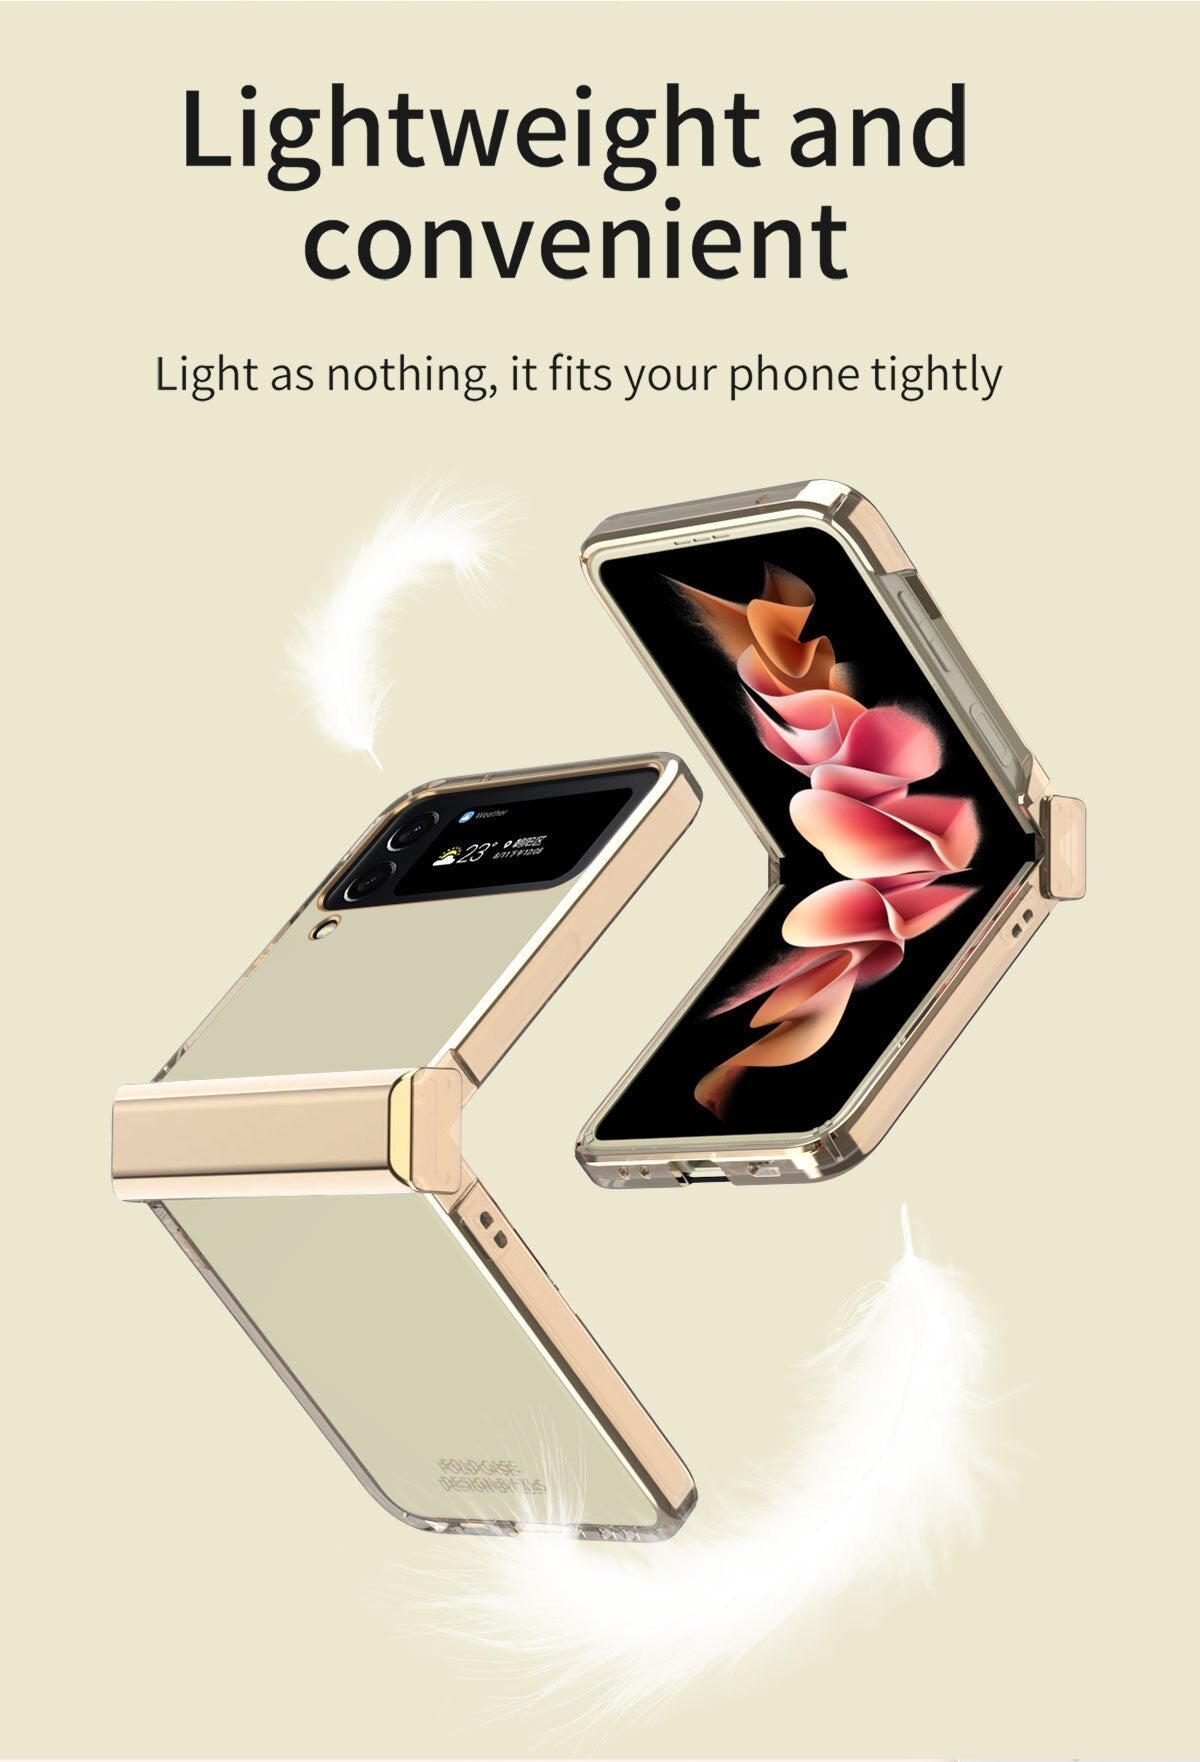 Hinge Case for Samsung Galaxy Z Flip 4 5G Case Full Protection Plating Transparent